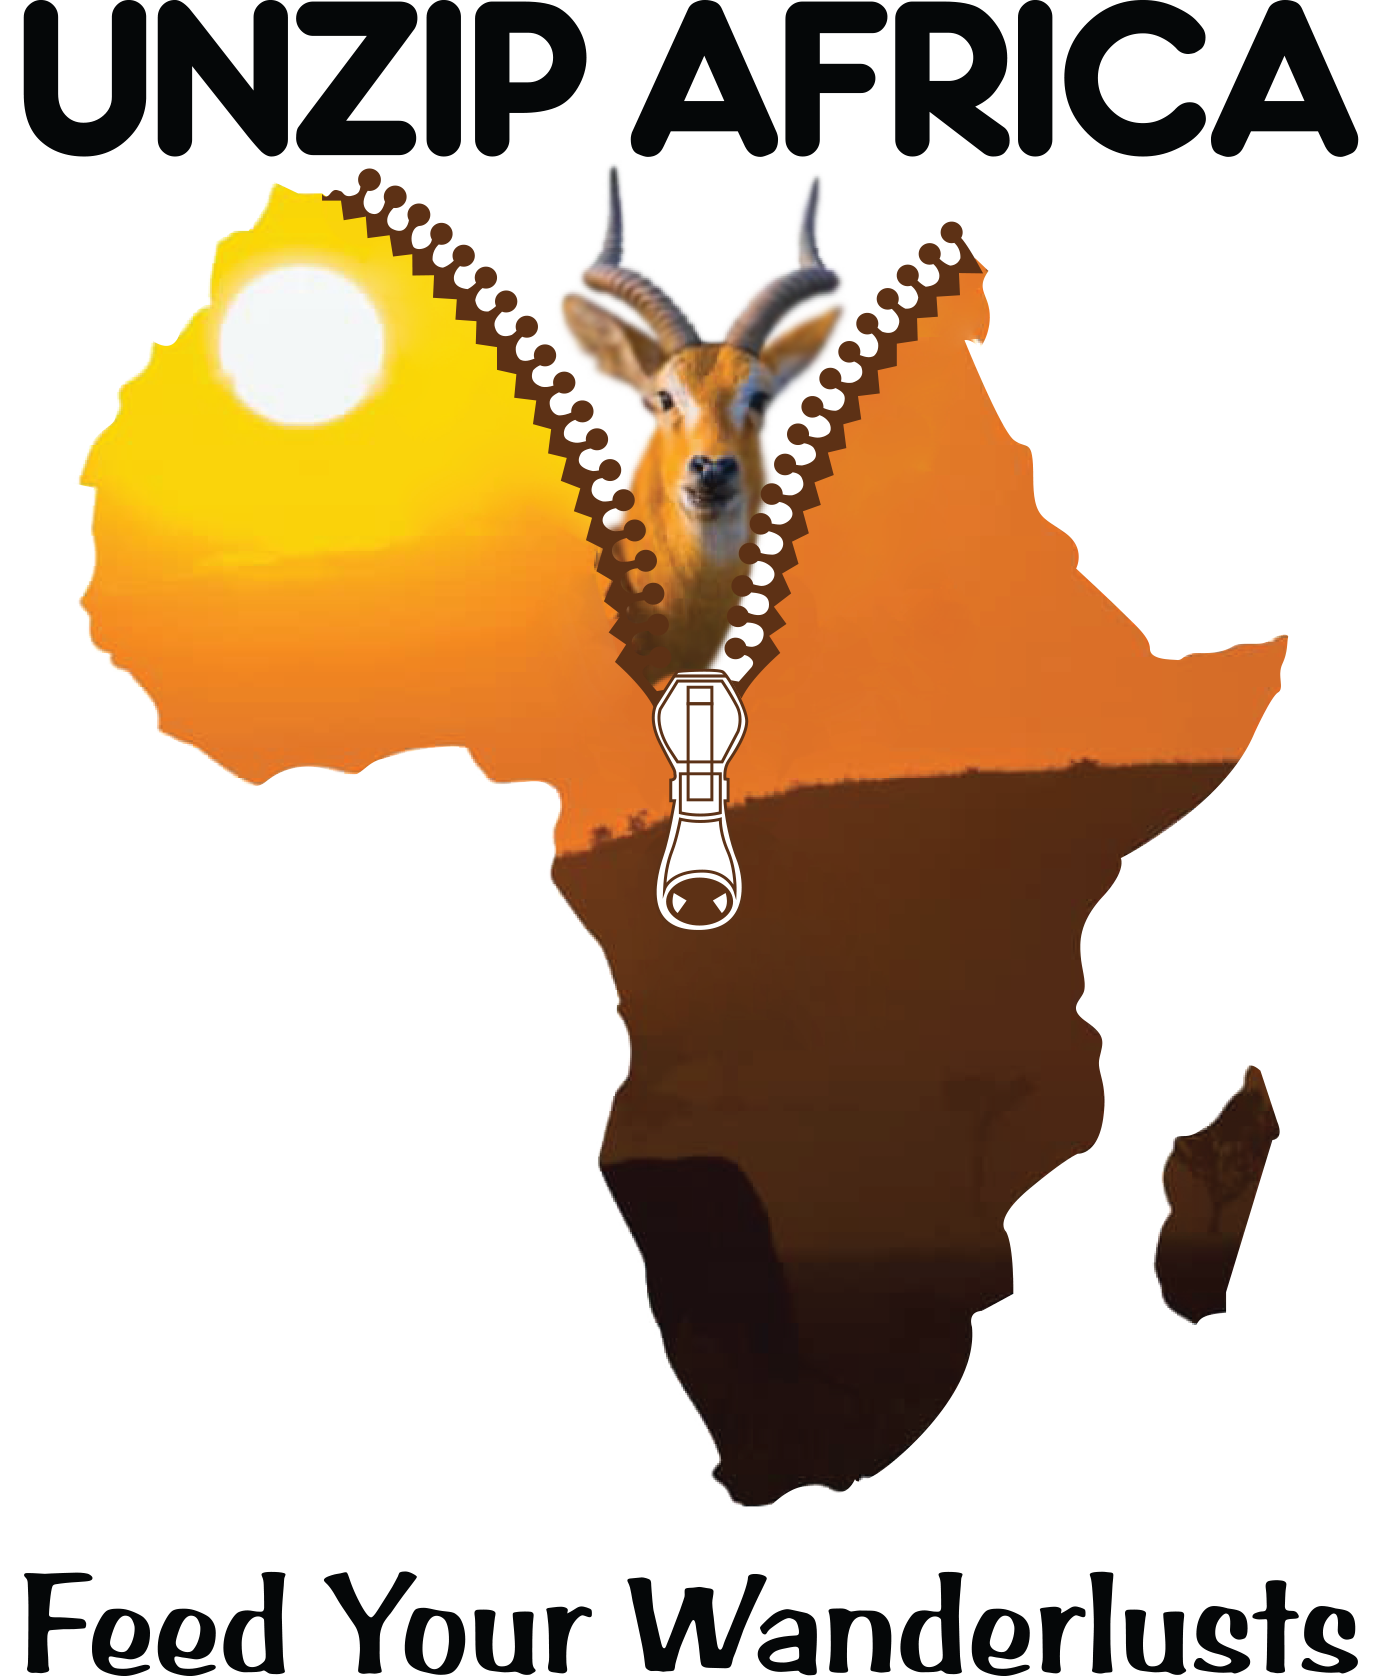 Authentic African Adventures